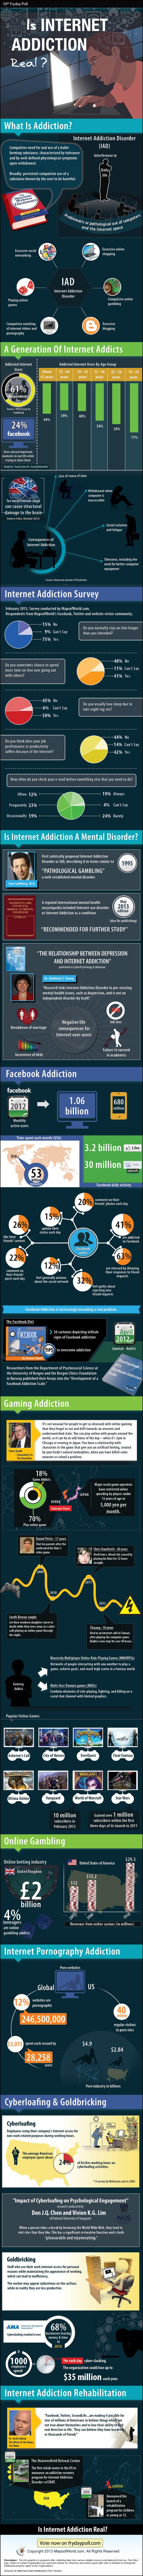 internet-addiction-study-facts-infographic